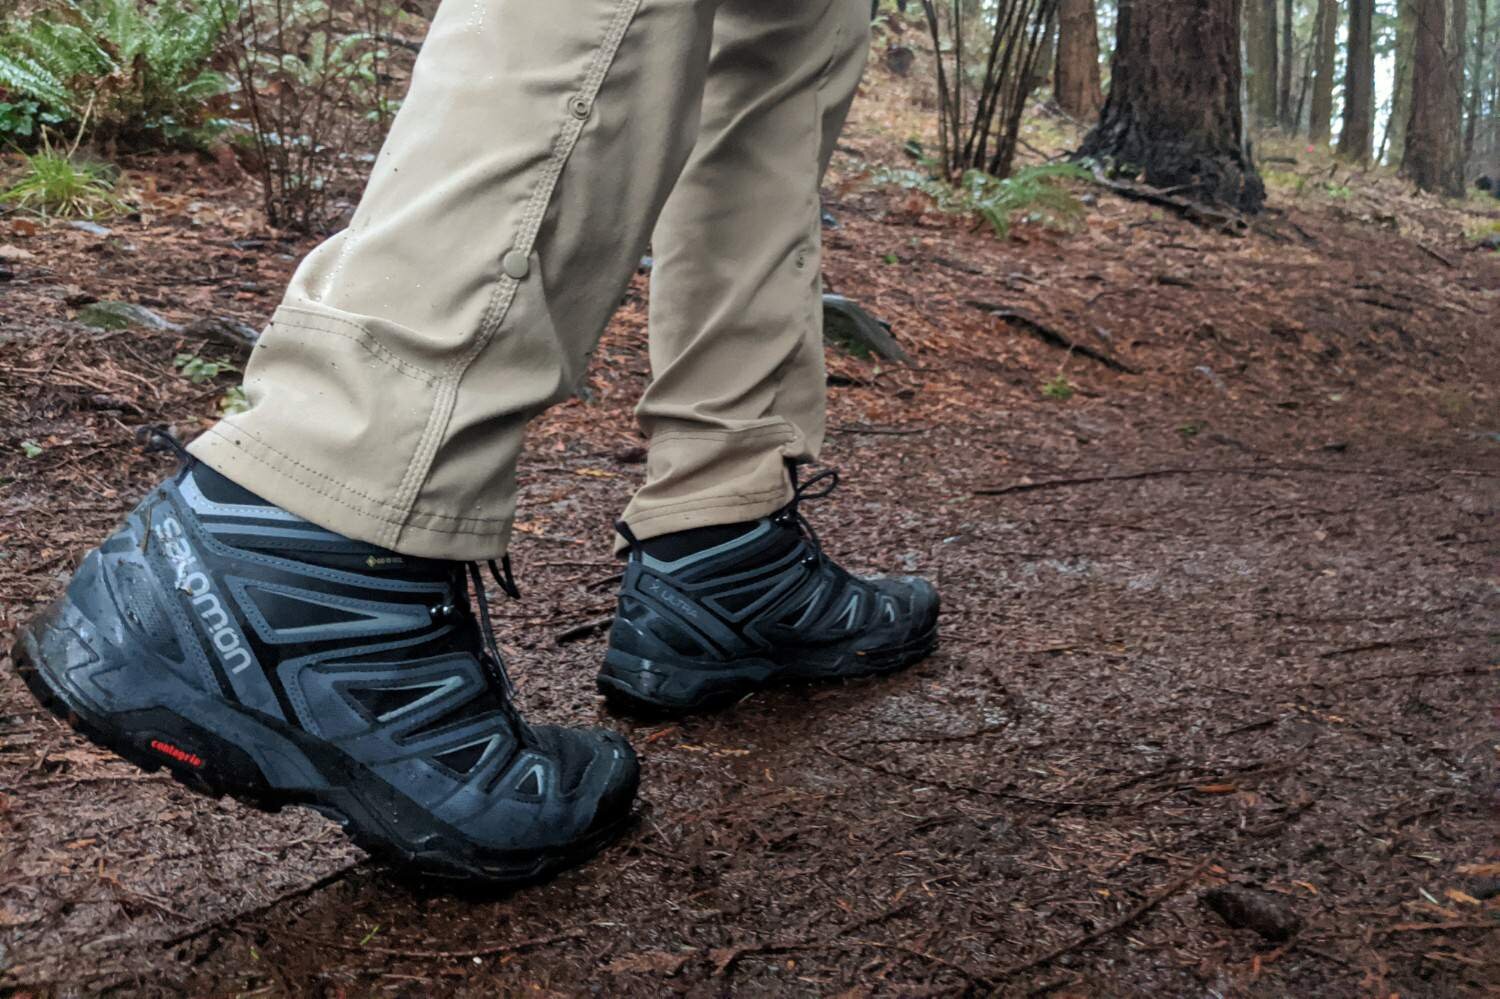 Salomon X Ultra 3 Gtx Mens Waterproof Walking Hiking Trainers Shoes Size 8-12 